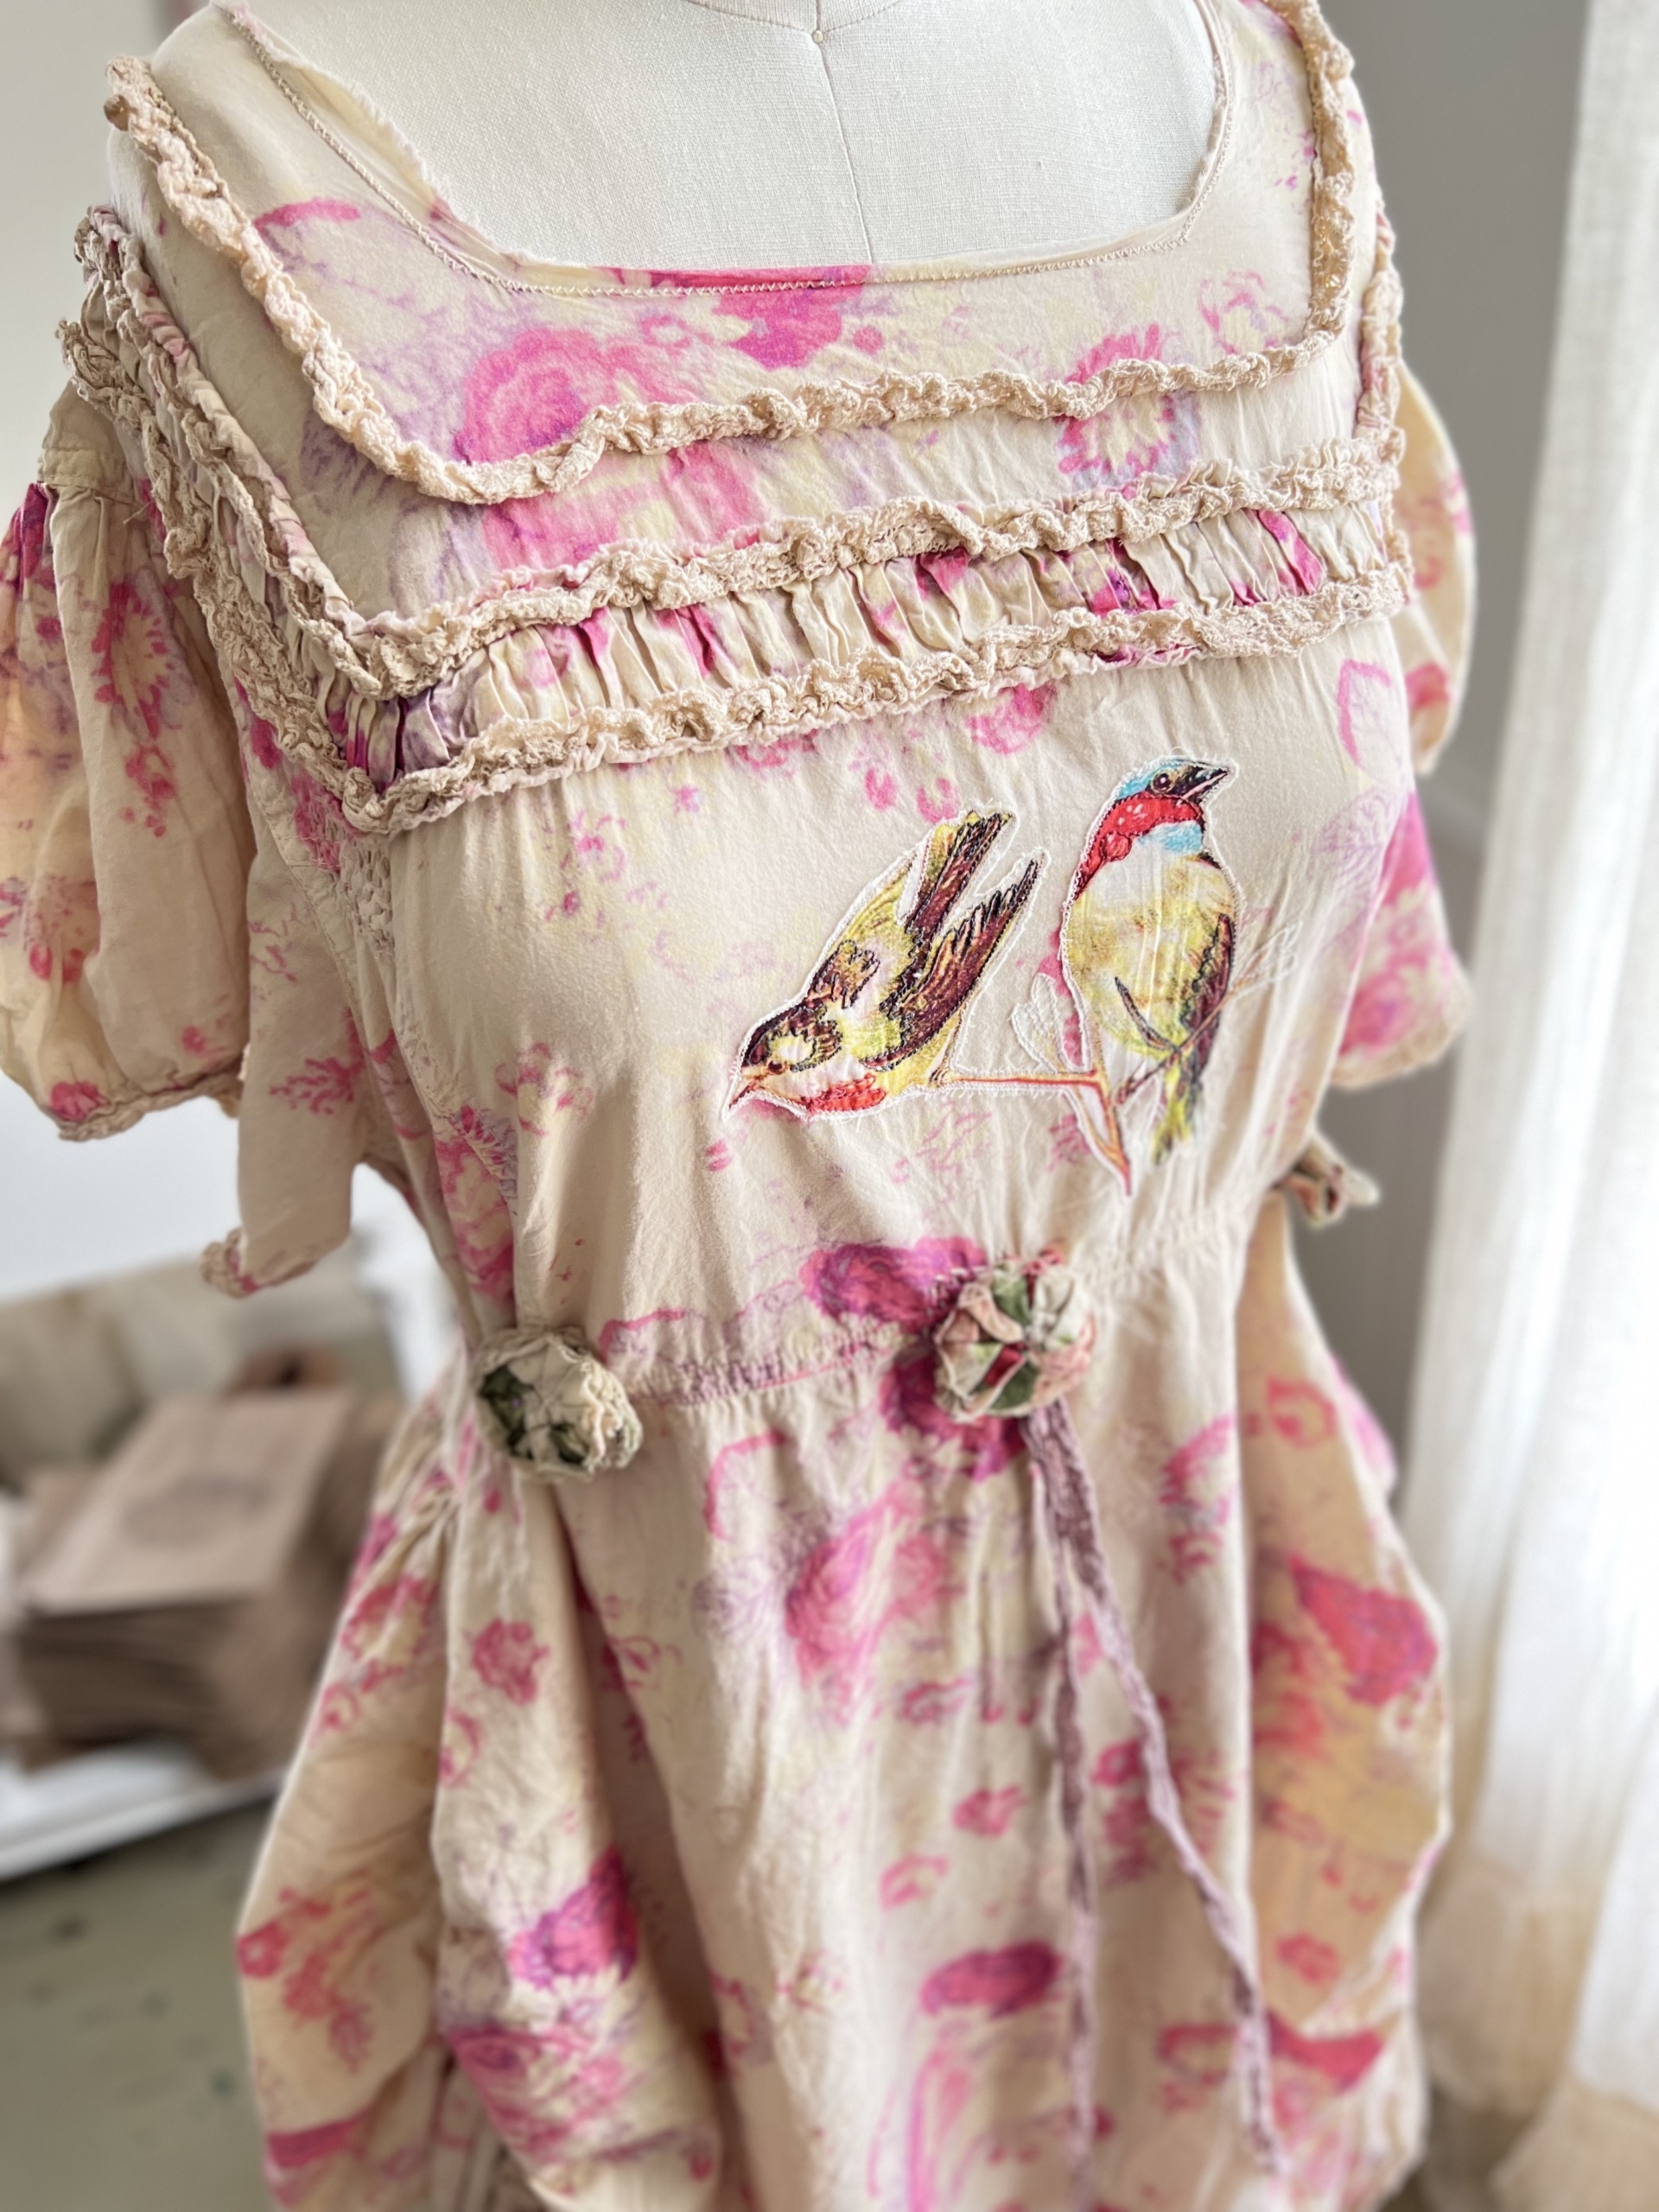 European Cotton Jovenelle Gather Dress by Magnolia Pearl in Garden Bloom Dress 861